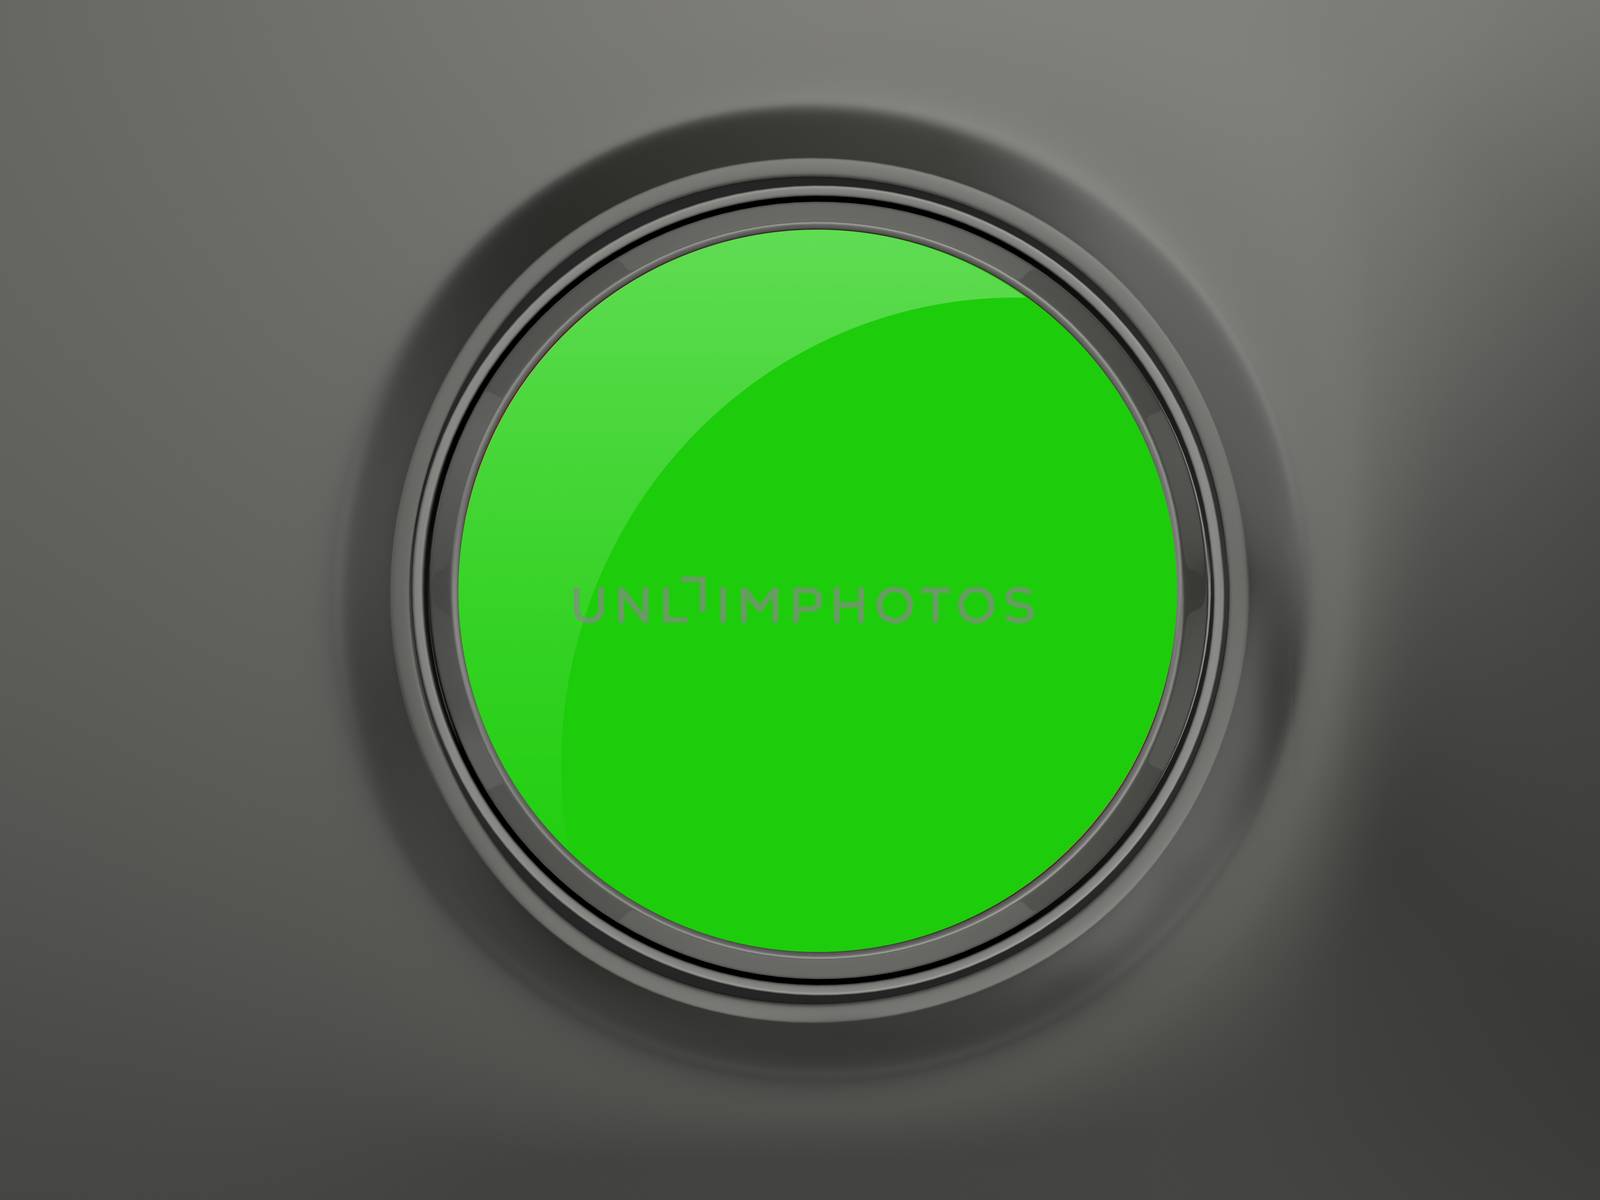 Blank green shiny button on dark background.